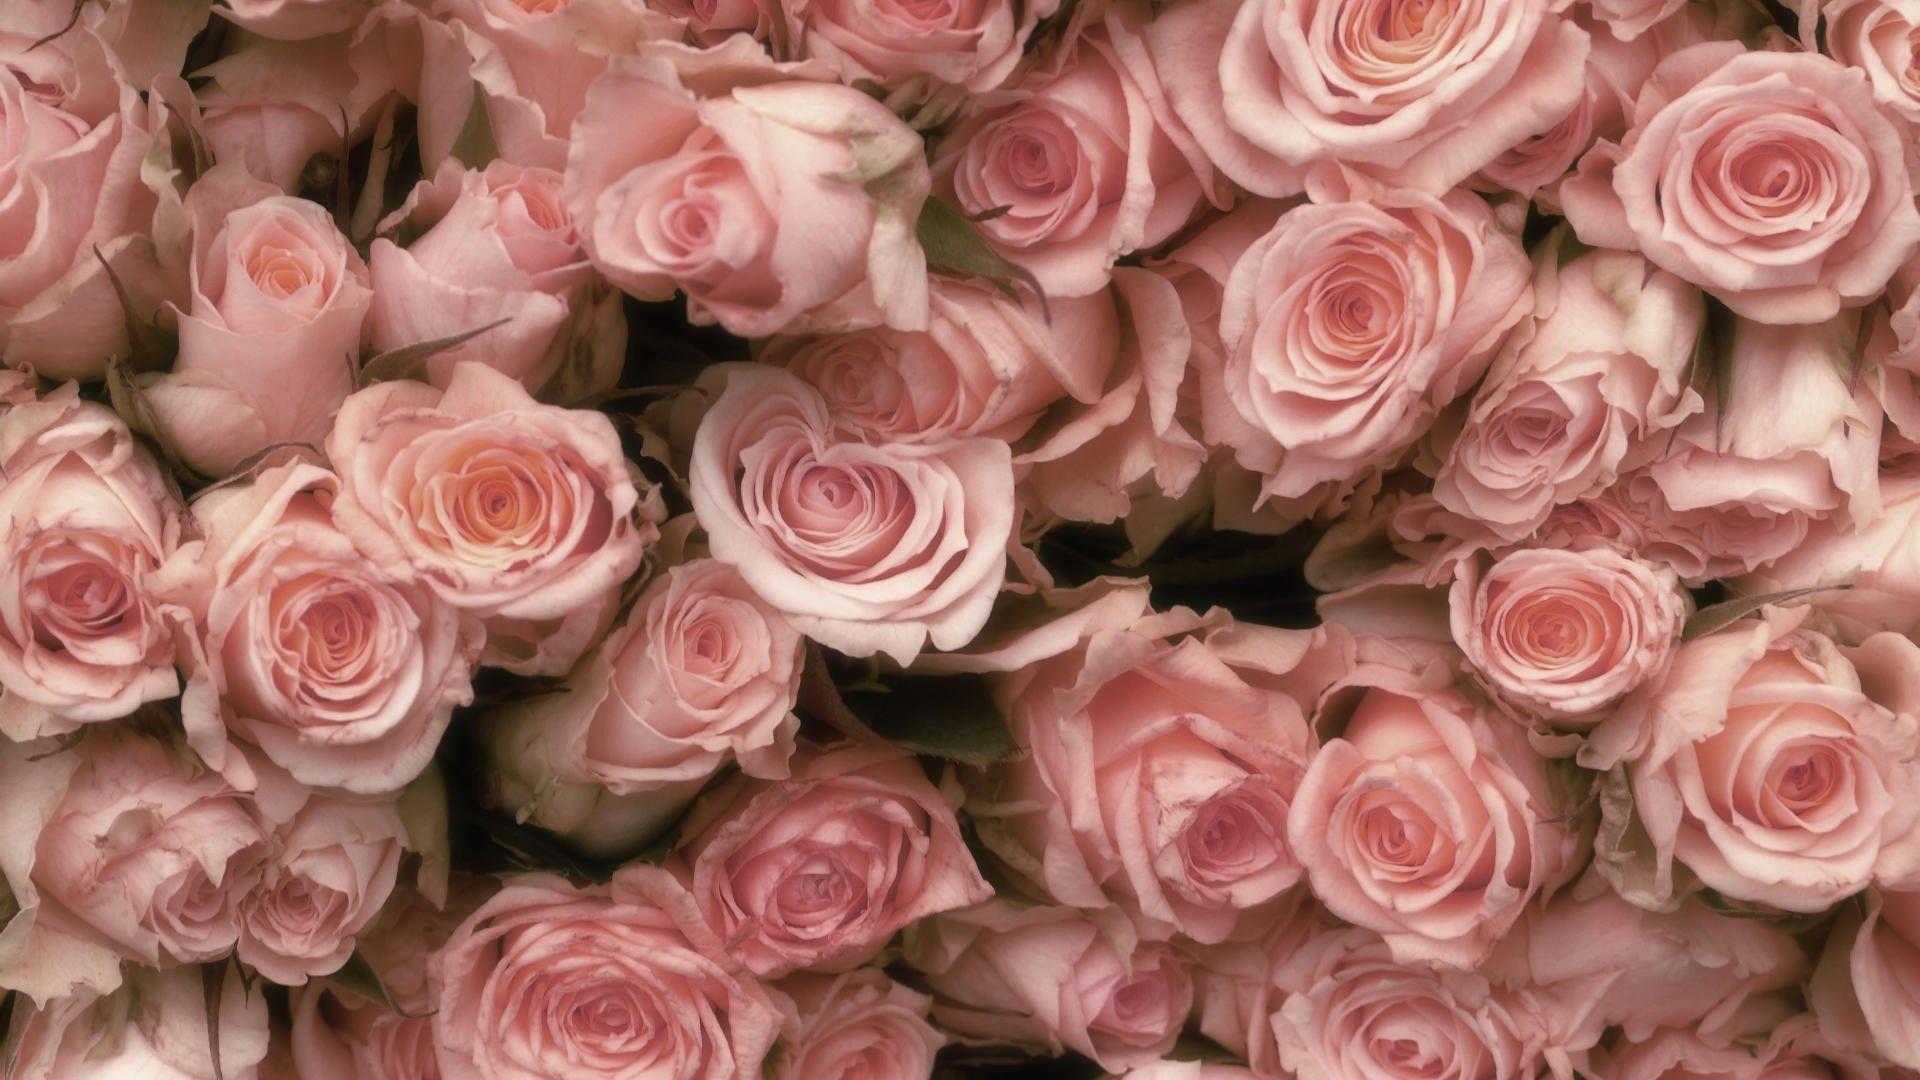 Best Pink Rose Flower Desktop Wallpaper You Can Get It For Free